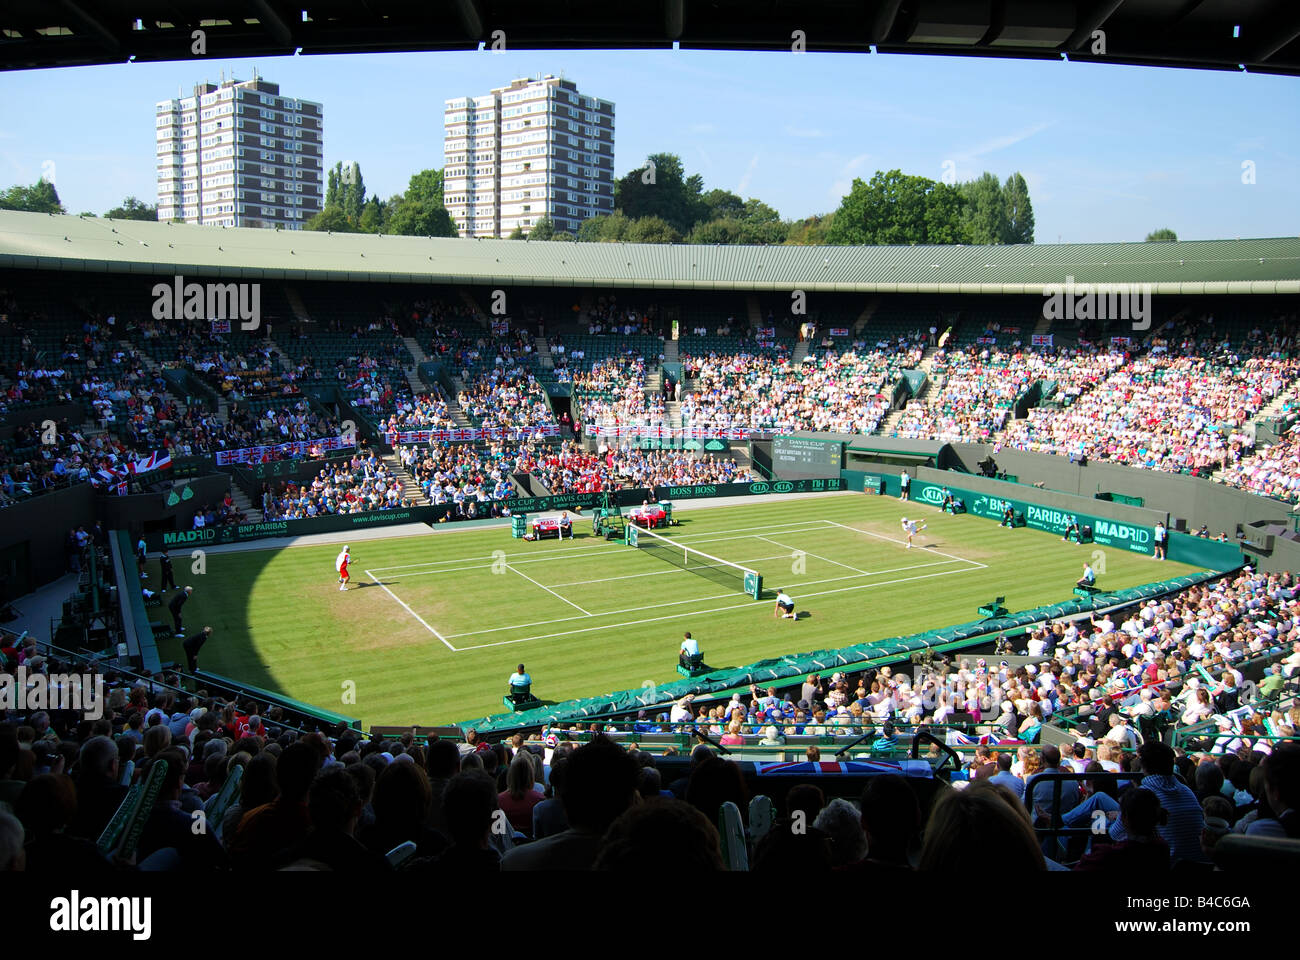 Davis Cup match, Great Britain vs Austria, Court One, Wimbledon Lawn Tennis Club, London Borough of Merton, Greater London, England, United Kingdom Stock Photo